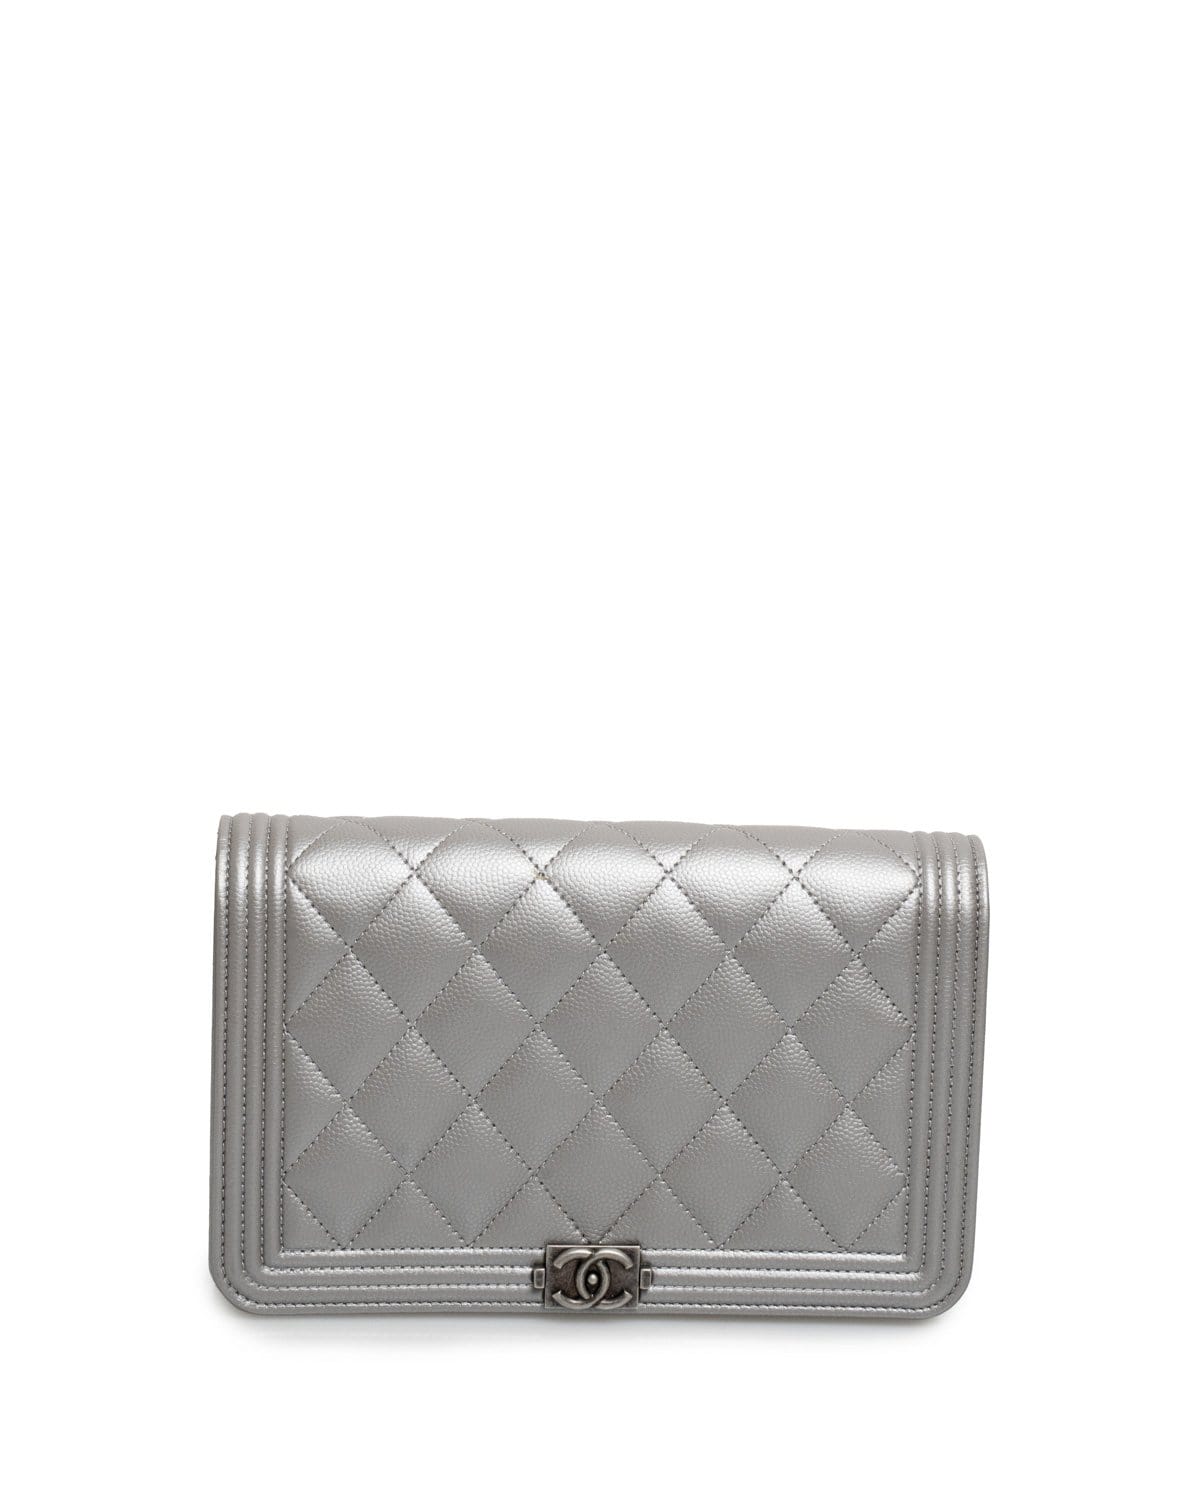 Chanel Chanel Boy Bag Wallet on Chain -ADL1586